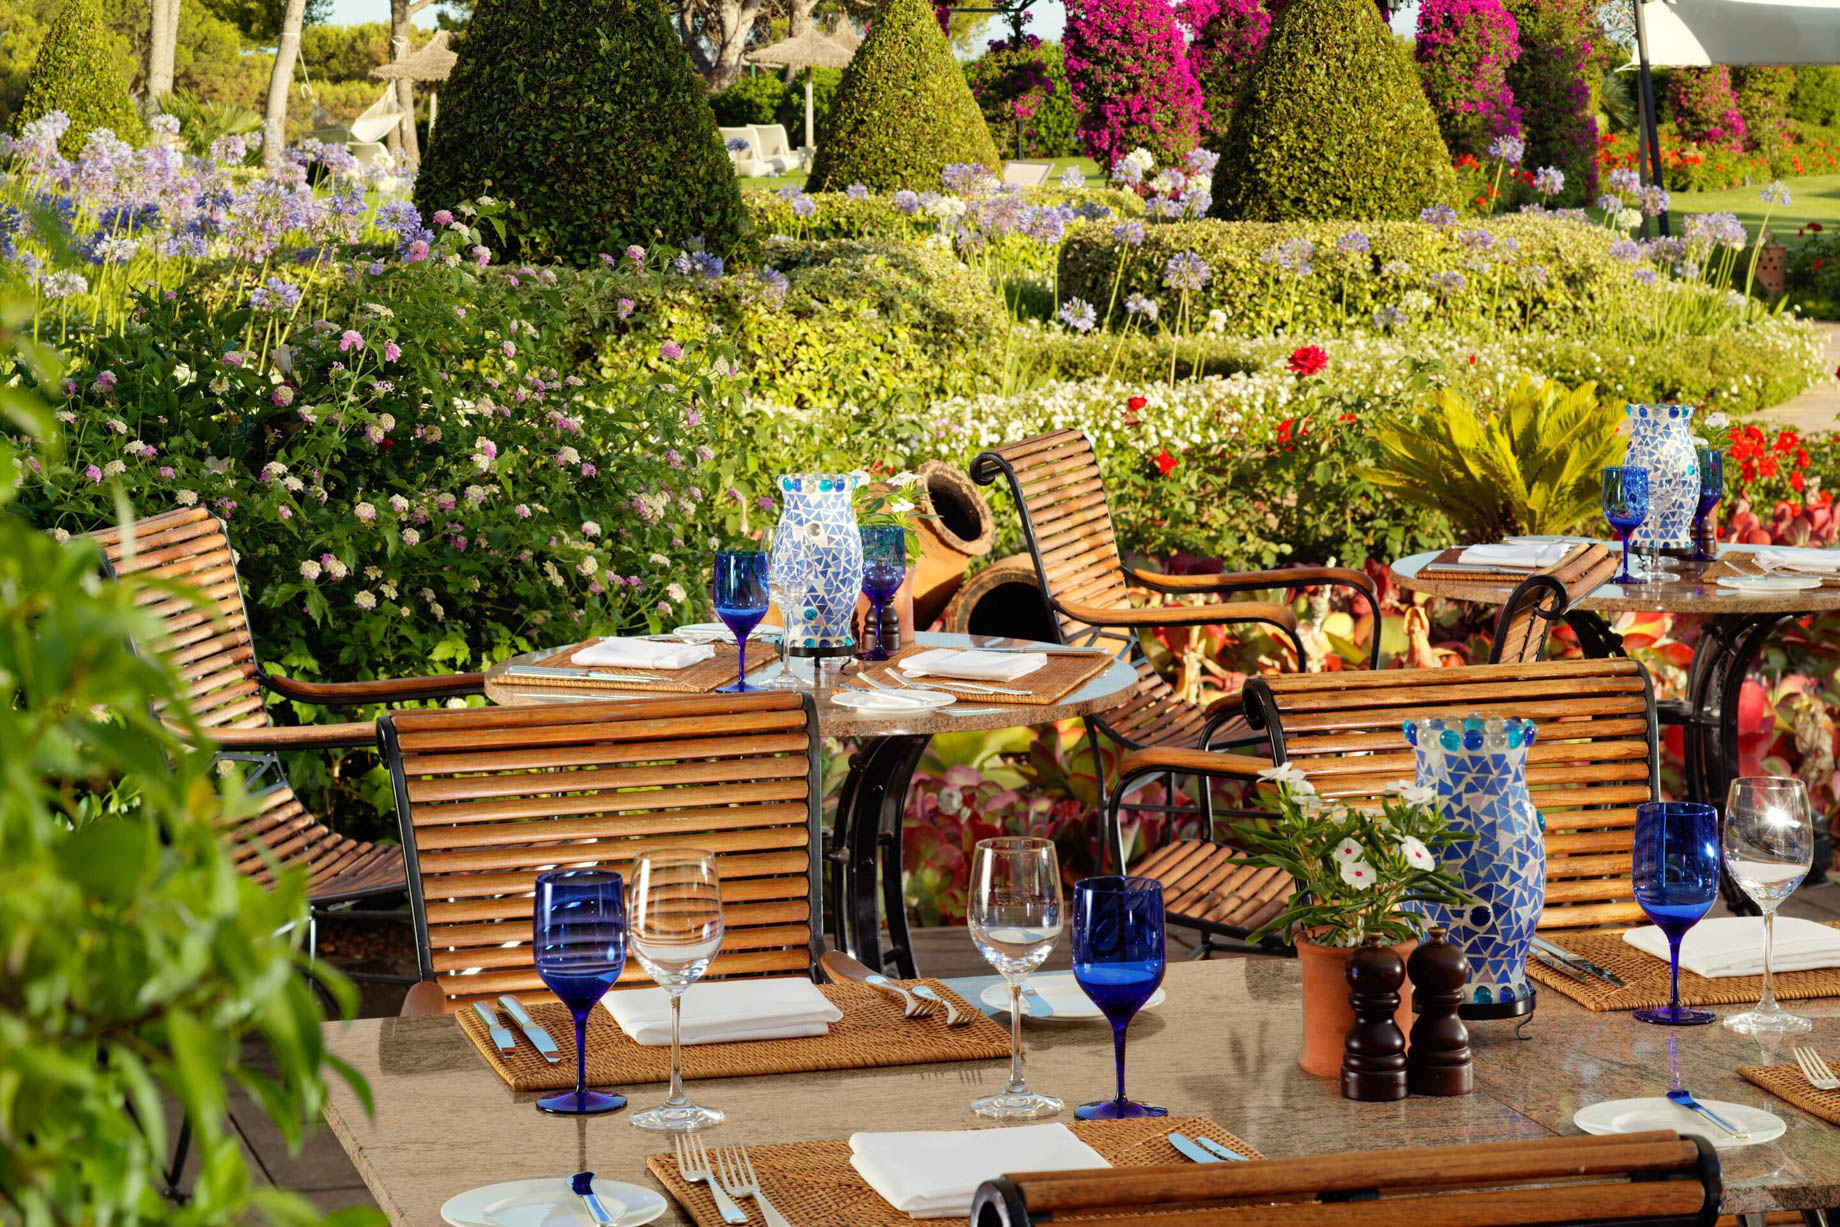 The St. Regis Mardavall Mallorca Resort - Palma de Mallorca, Spain - Aqua Restaurant Terrace